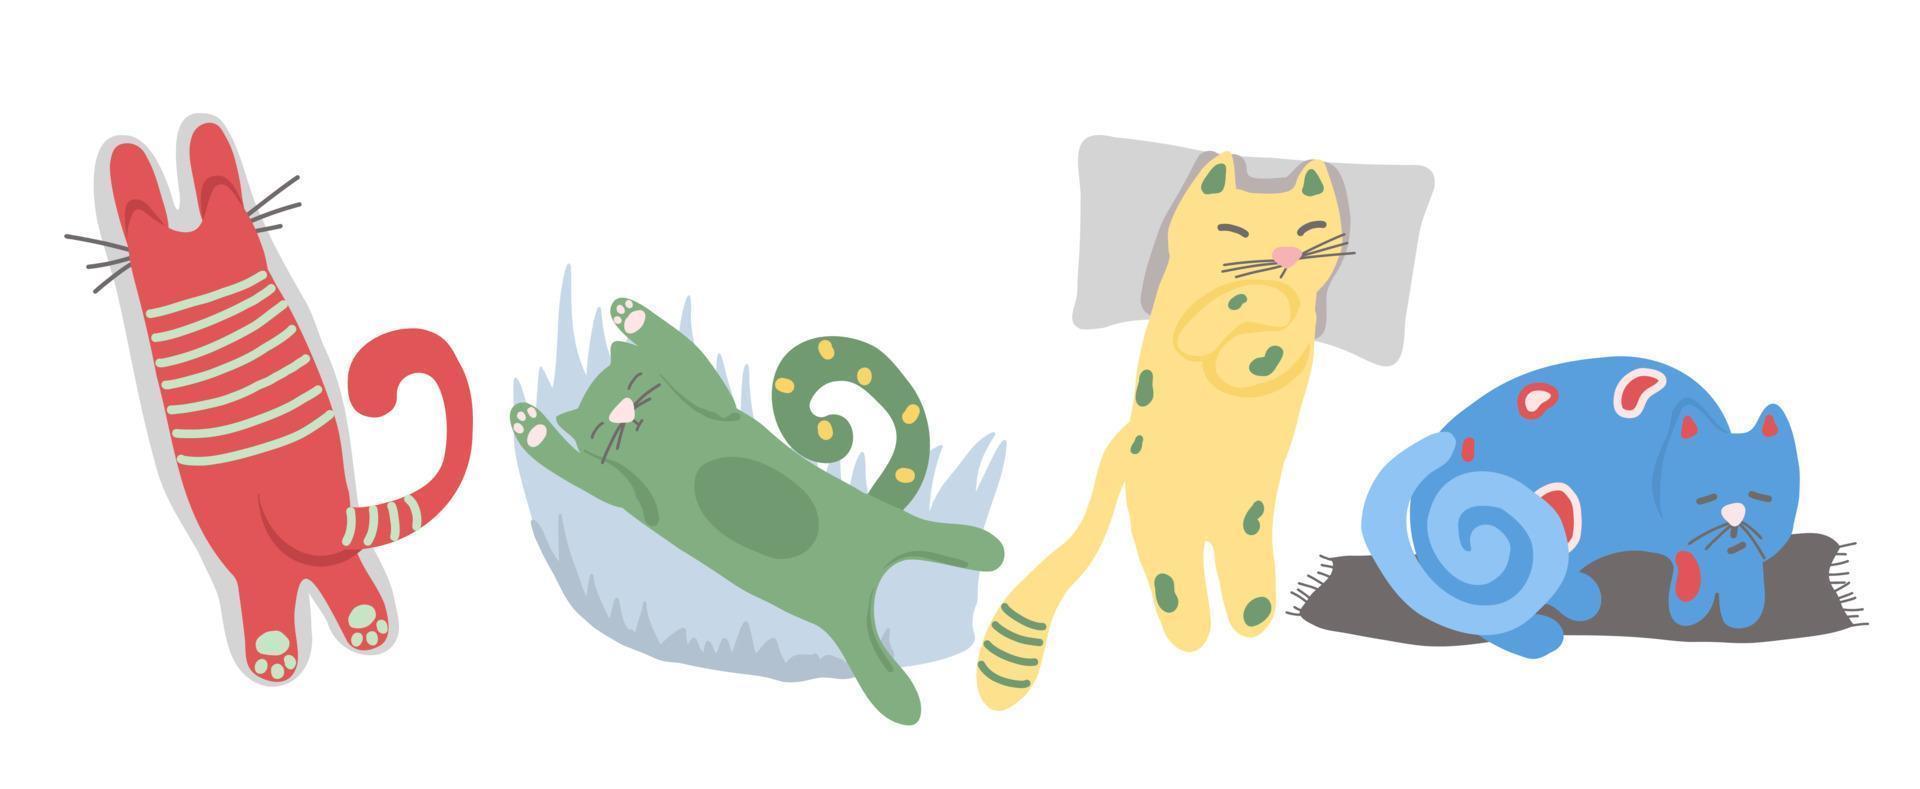 conjunto de gatos de dibujos animados. gatitos de diferentes colores para decoración. gatitos divertidos. vector